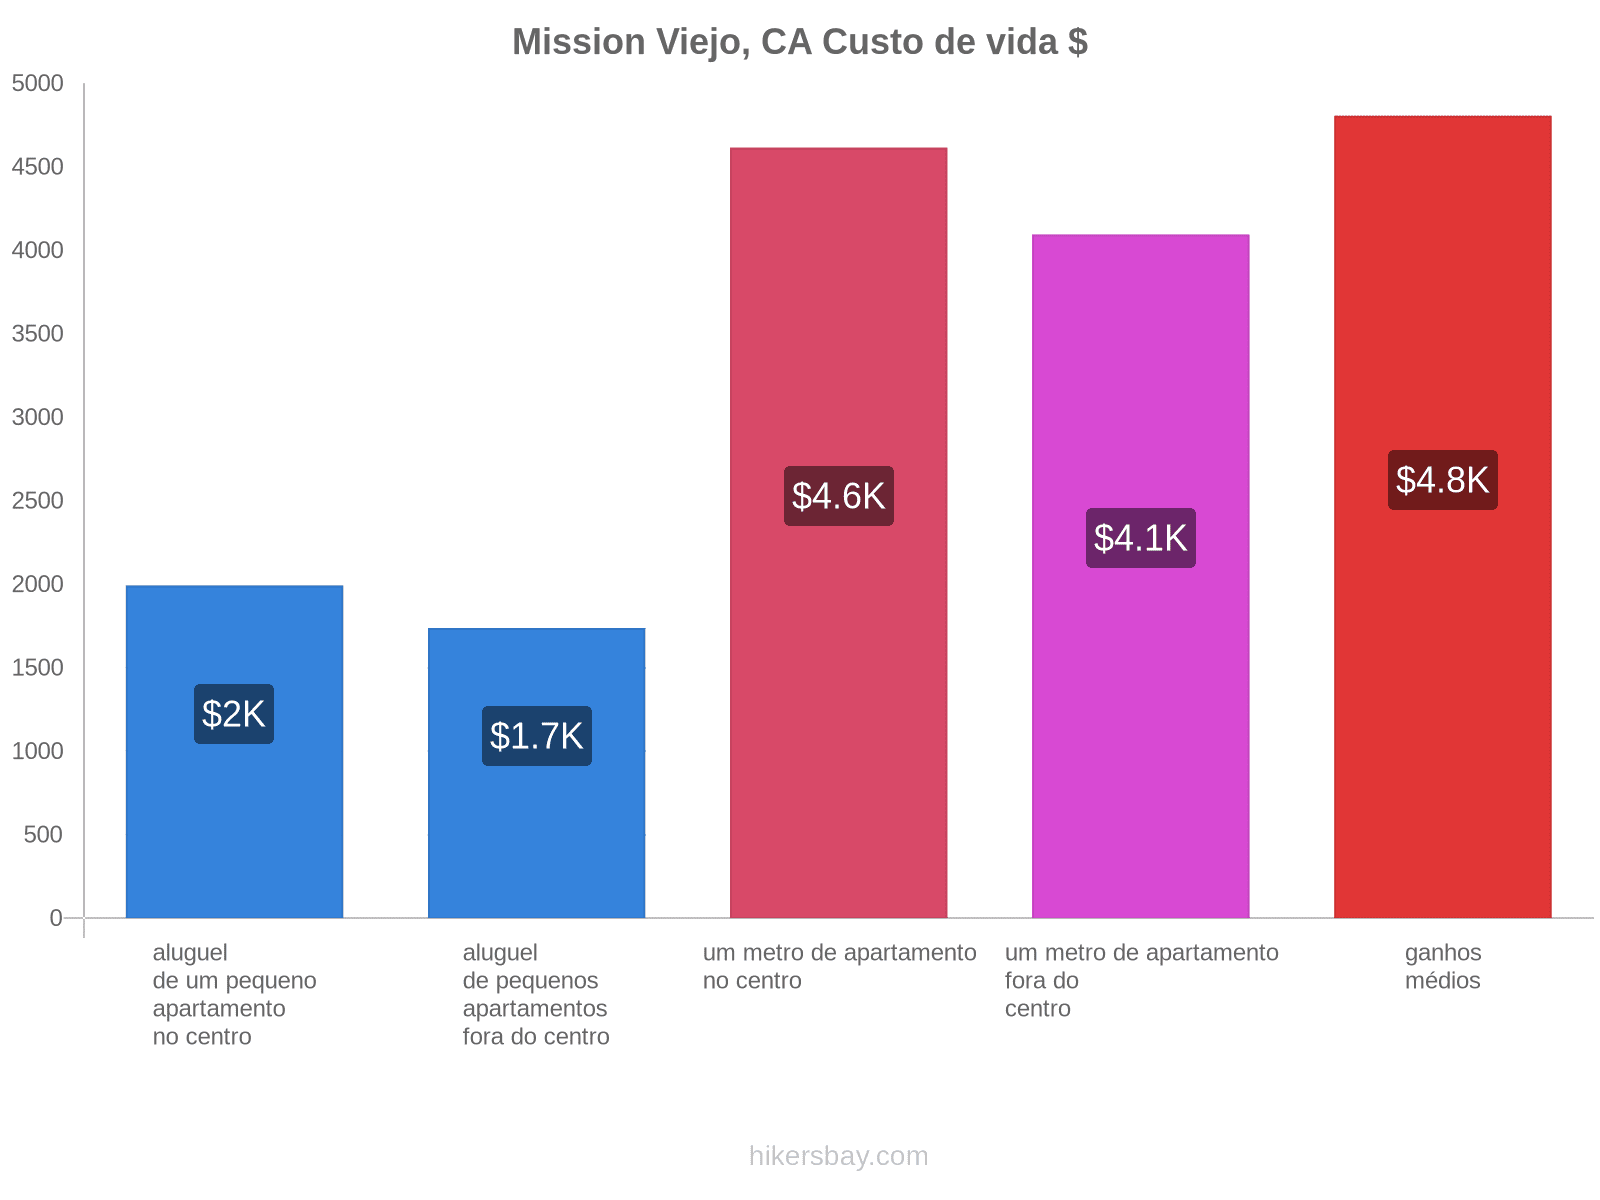 Mission Viejo, CA custo de vida hikersbay.com